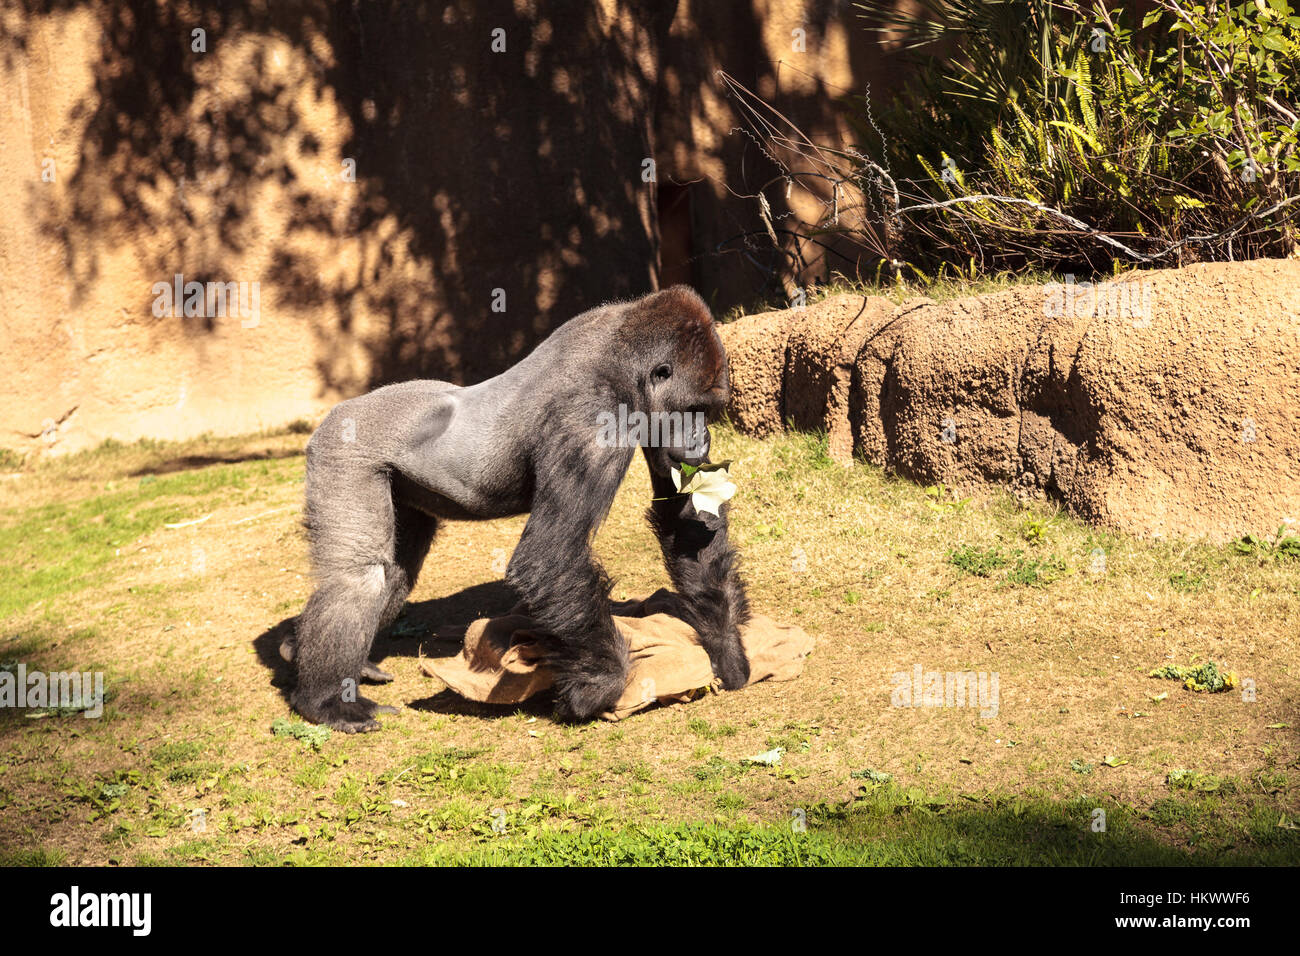 Western pianura gorilla si trova nei boschi e paludi di pianura in Africa Foto Stock